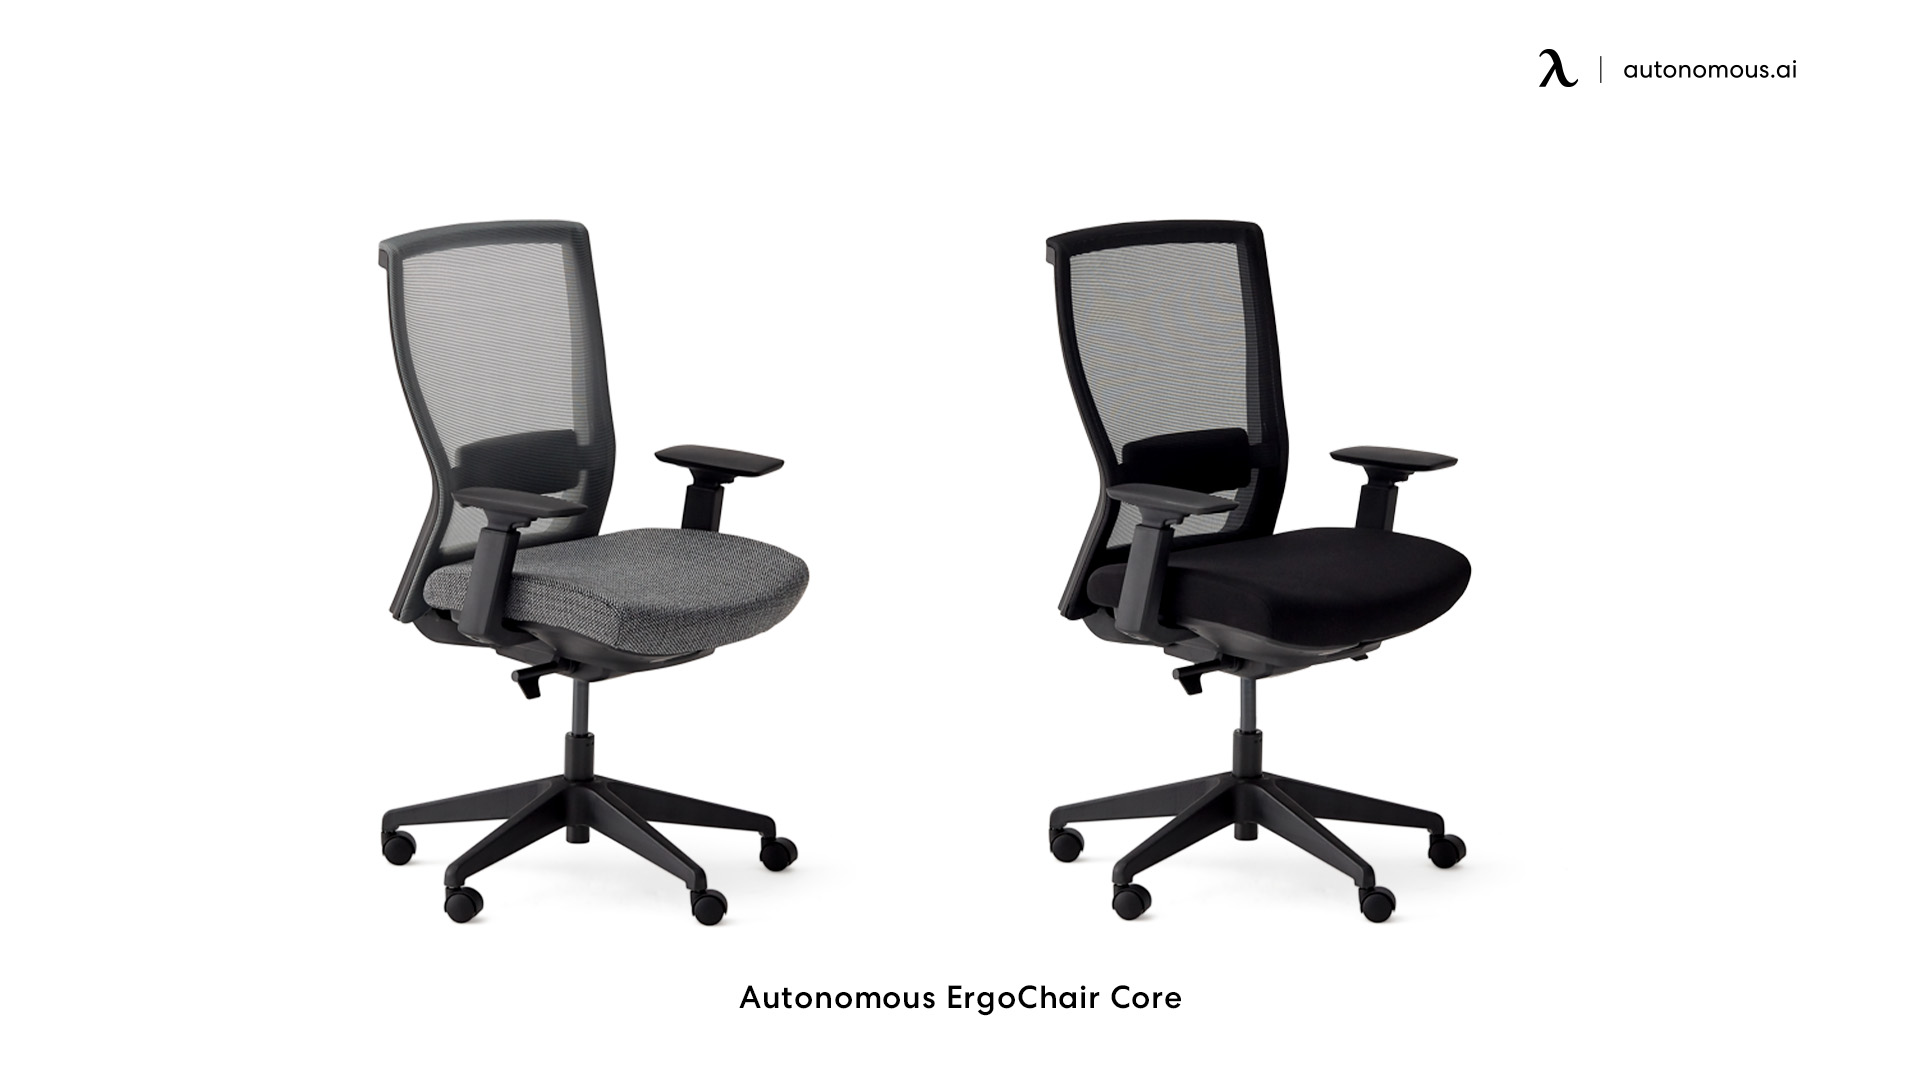 Autonomous ErgoChair Core super comfortable gaming chair